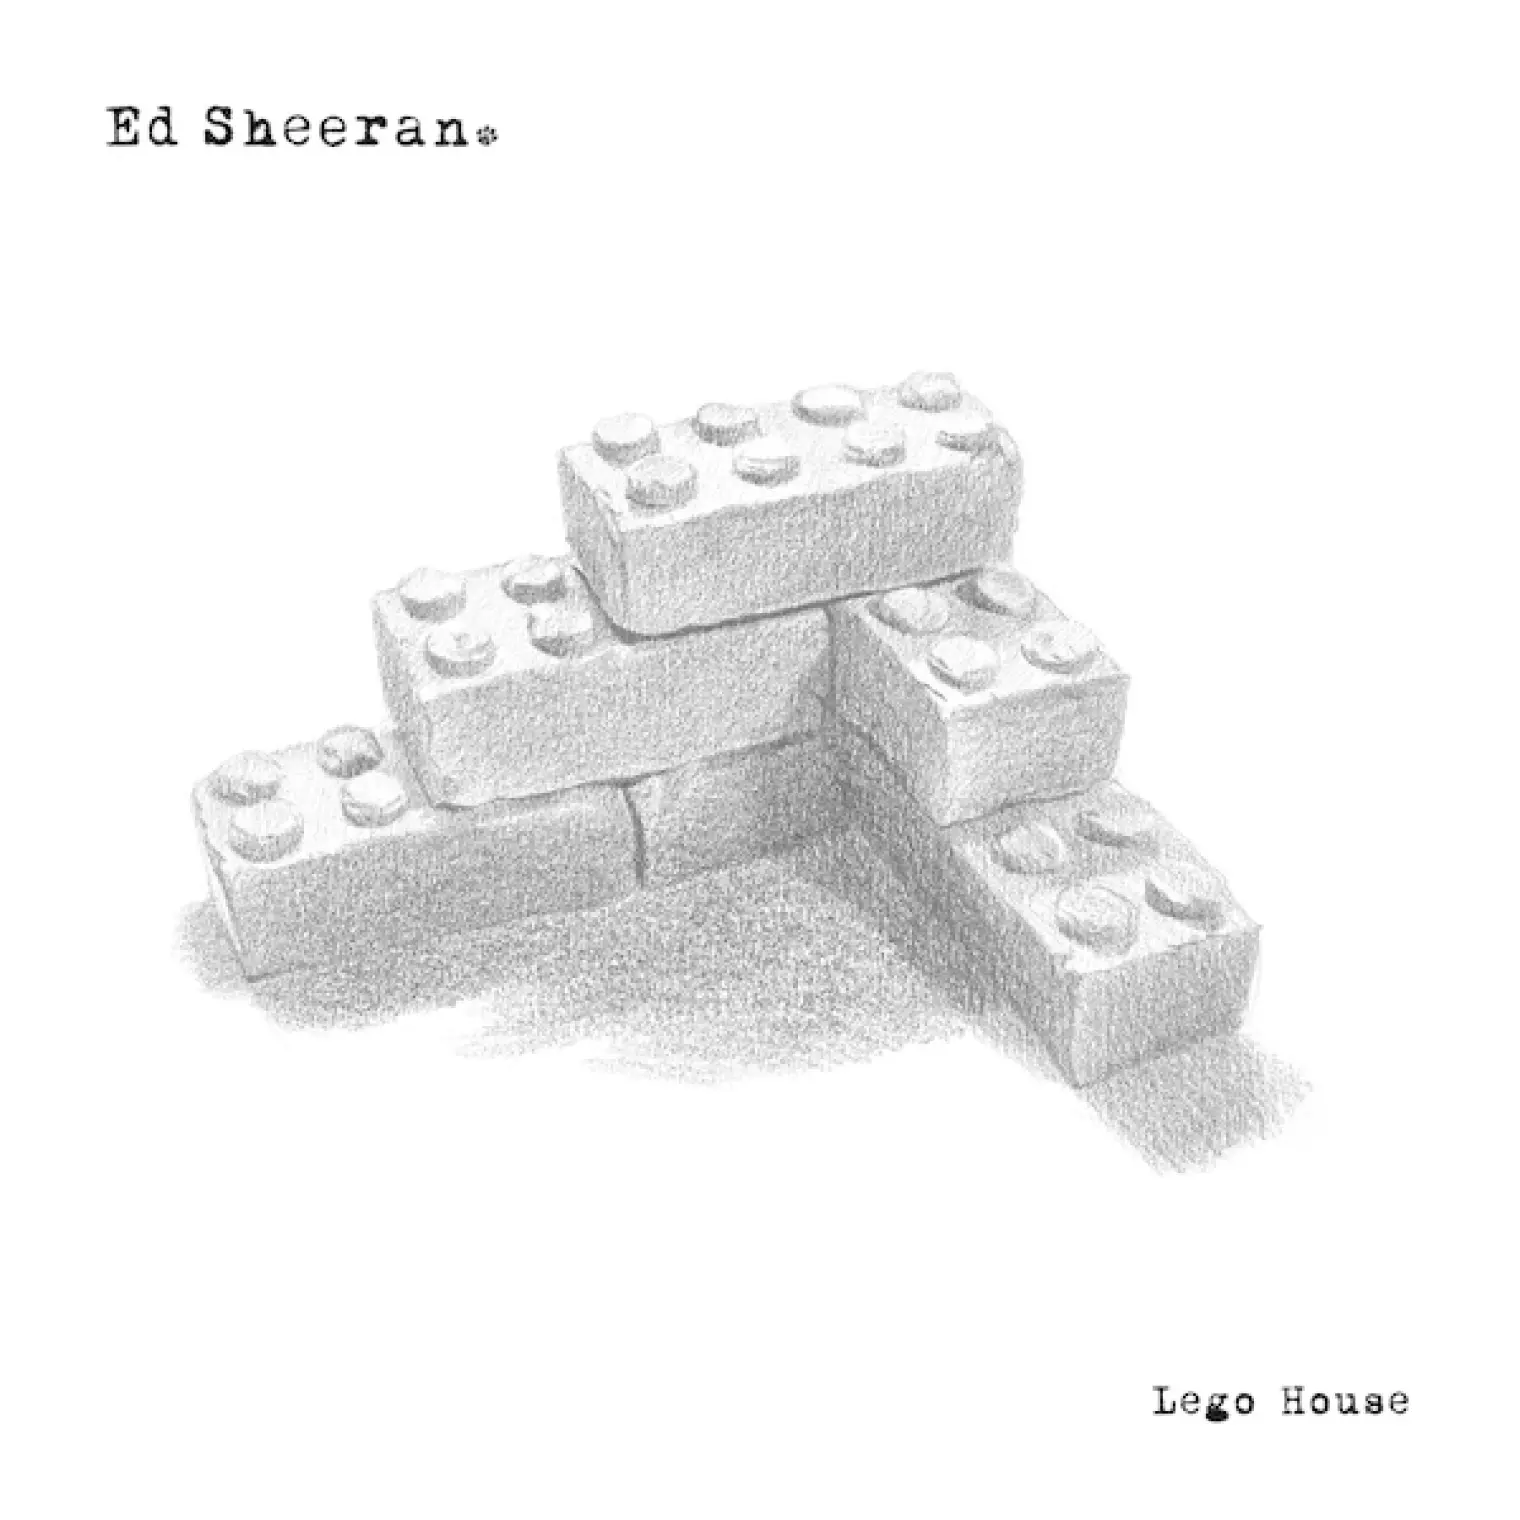 Lego House -  Ed Sheeran 